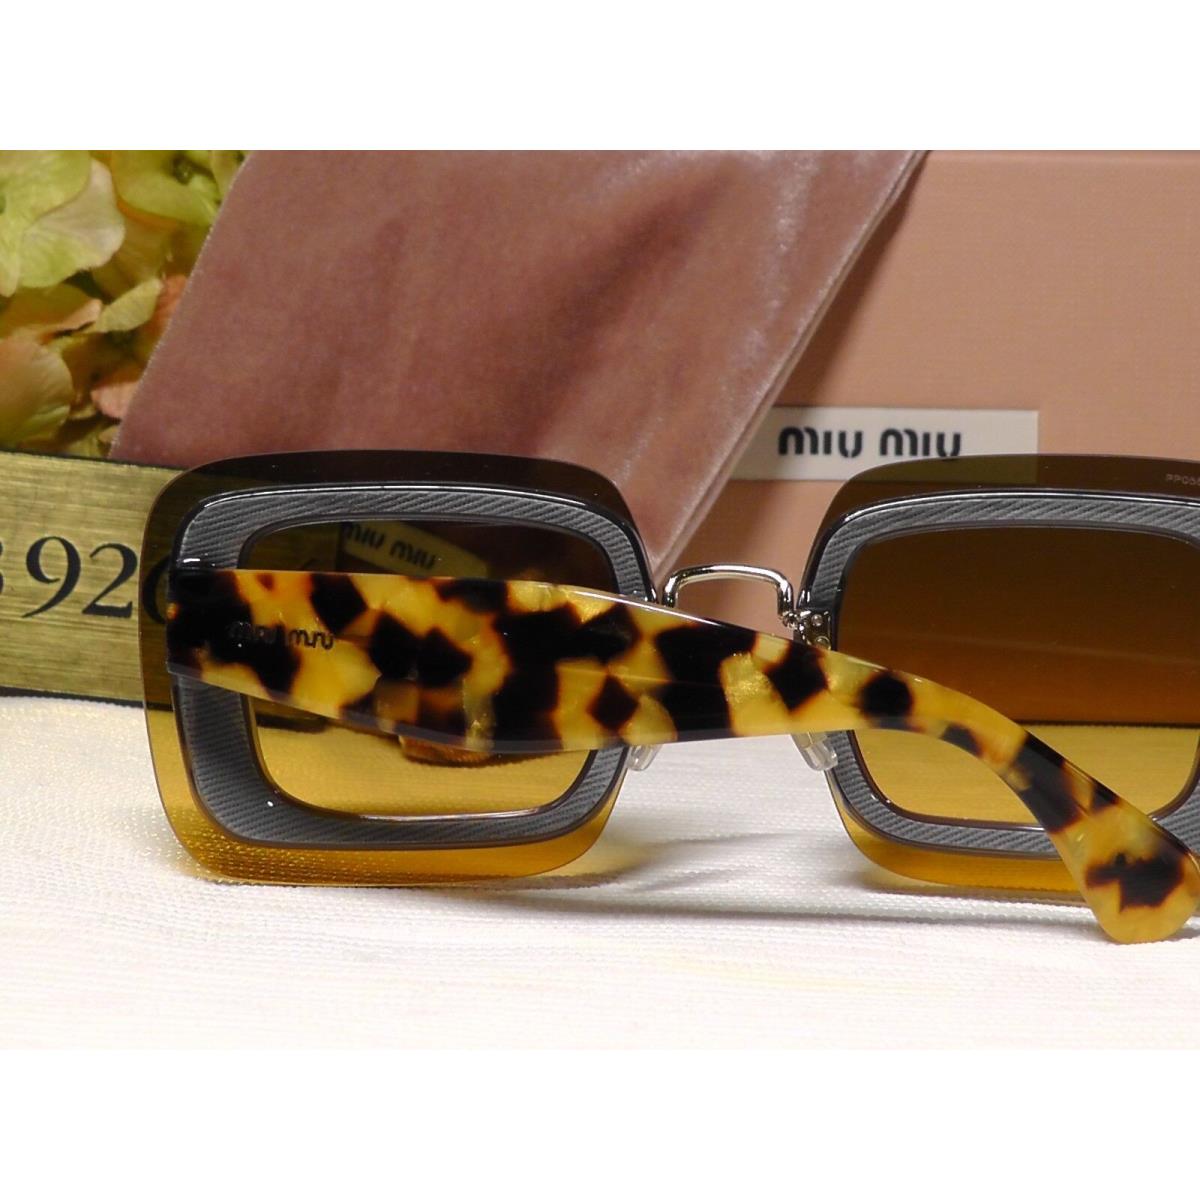 Miu Miu sunglasses  - Light Havana Frame, Gray / Yellow Lens 3